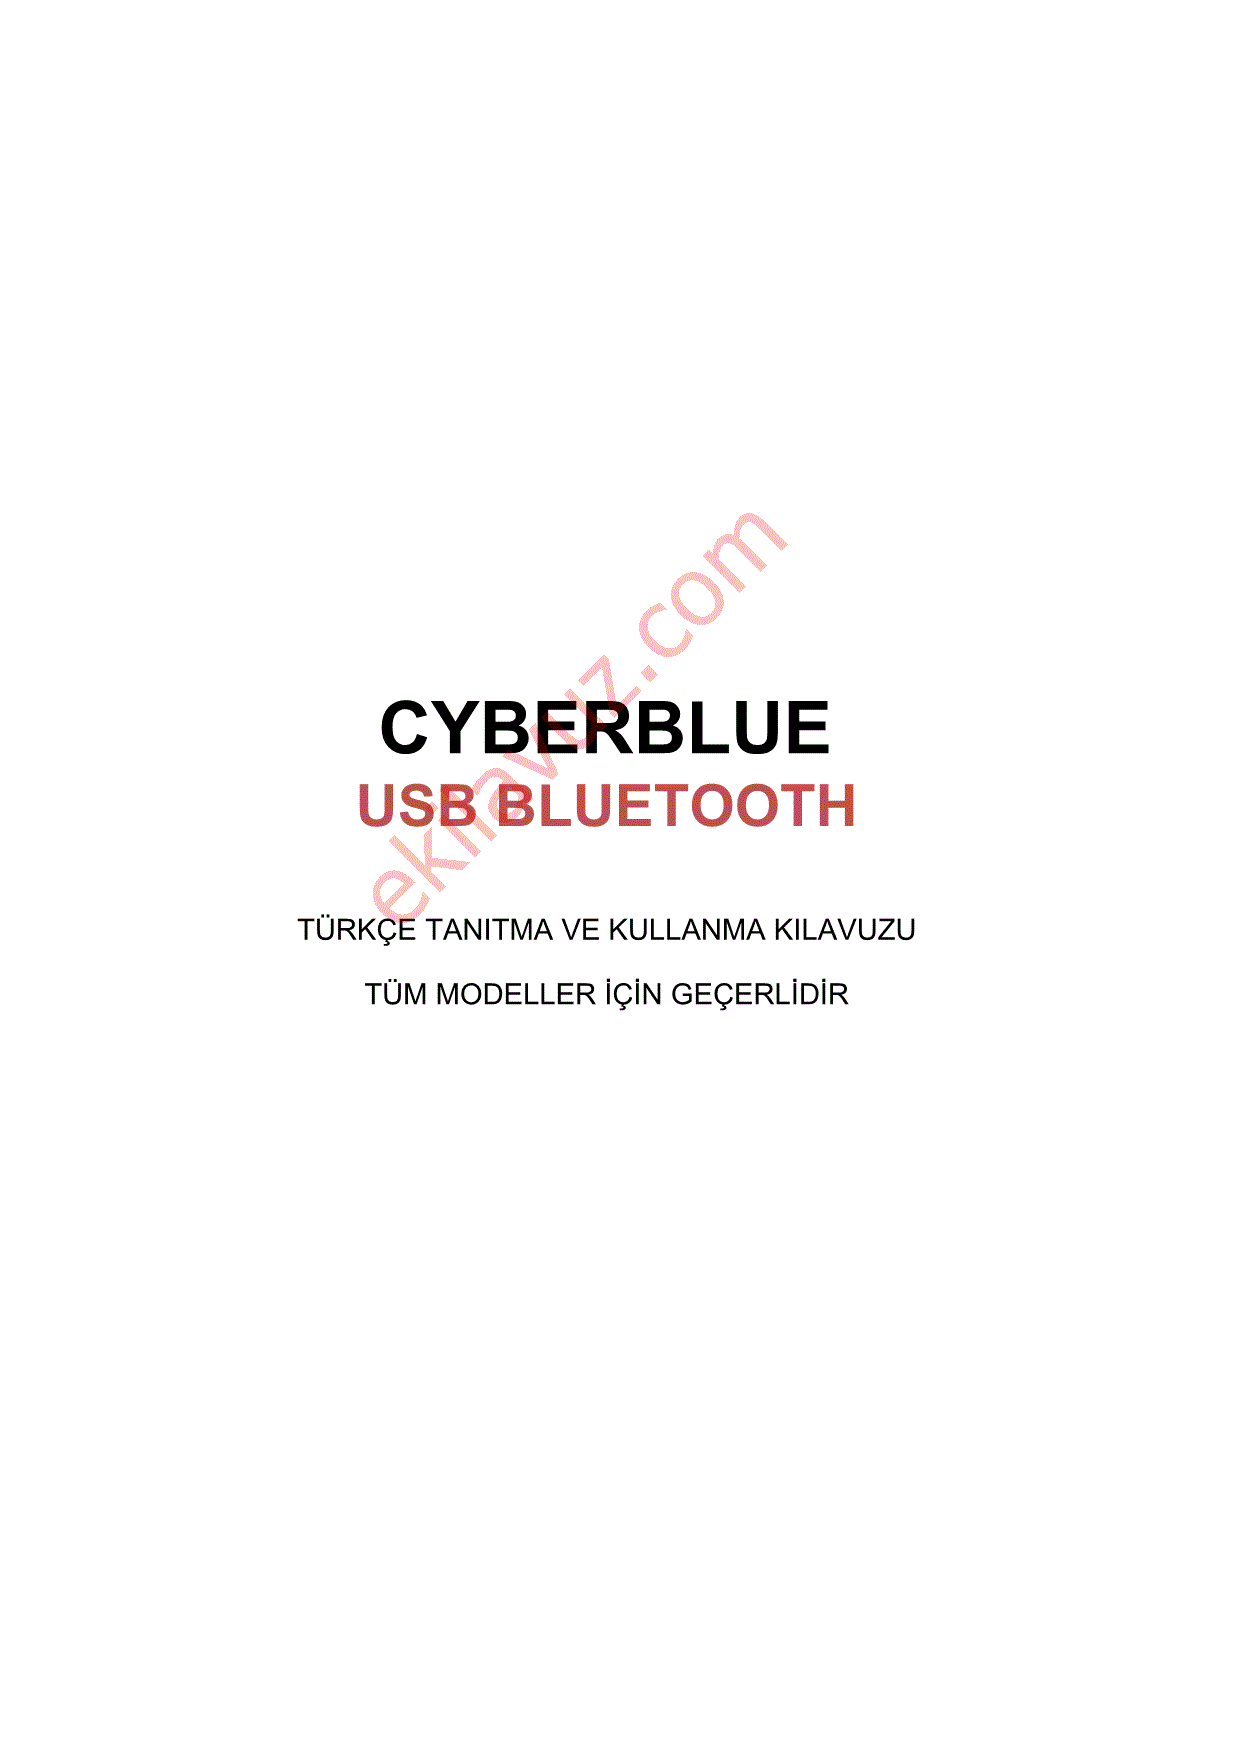 cyber blue bluetooth driver windows 7